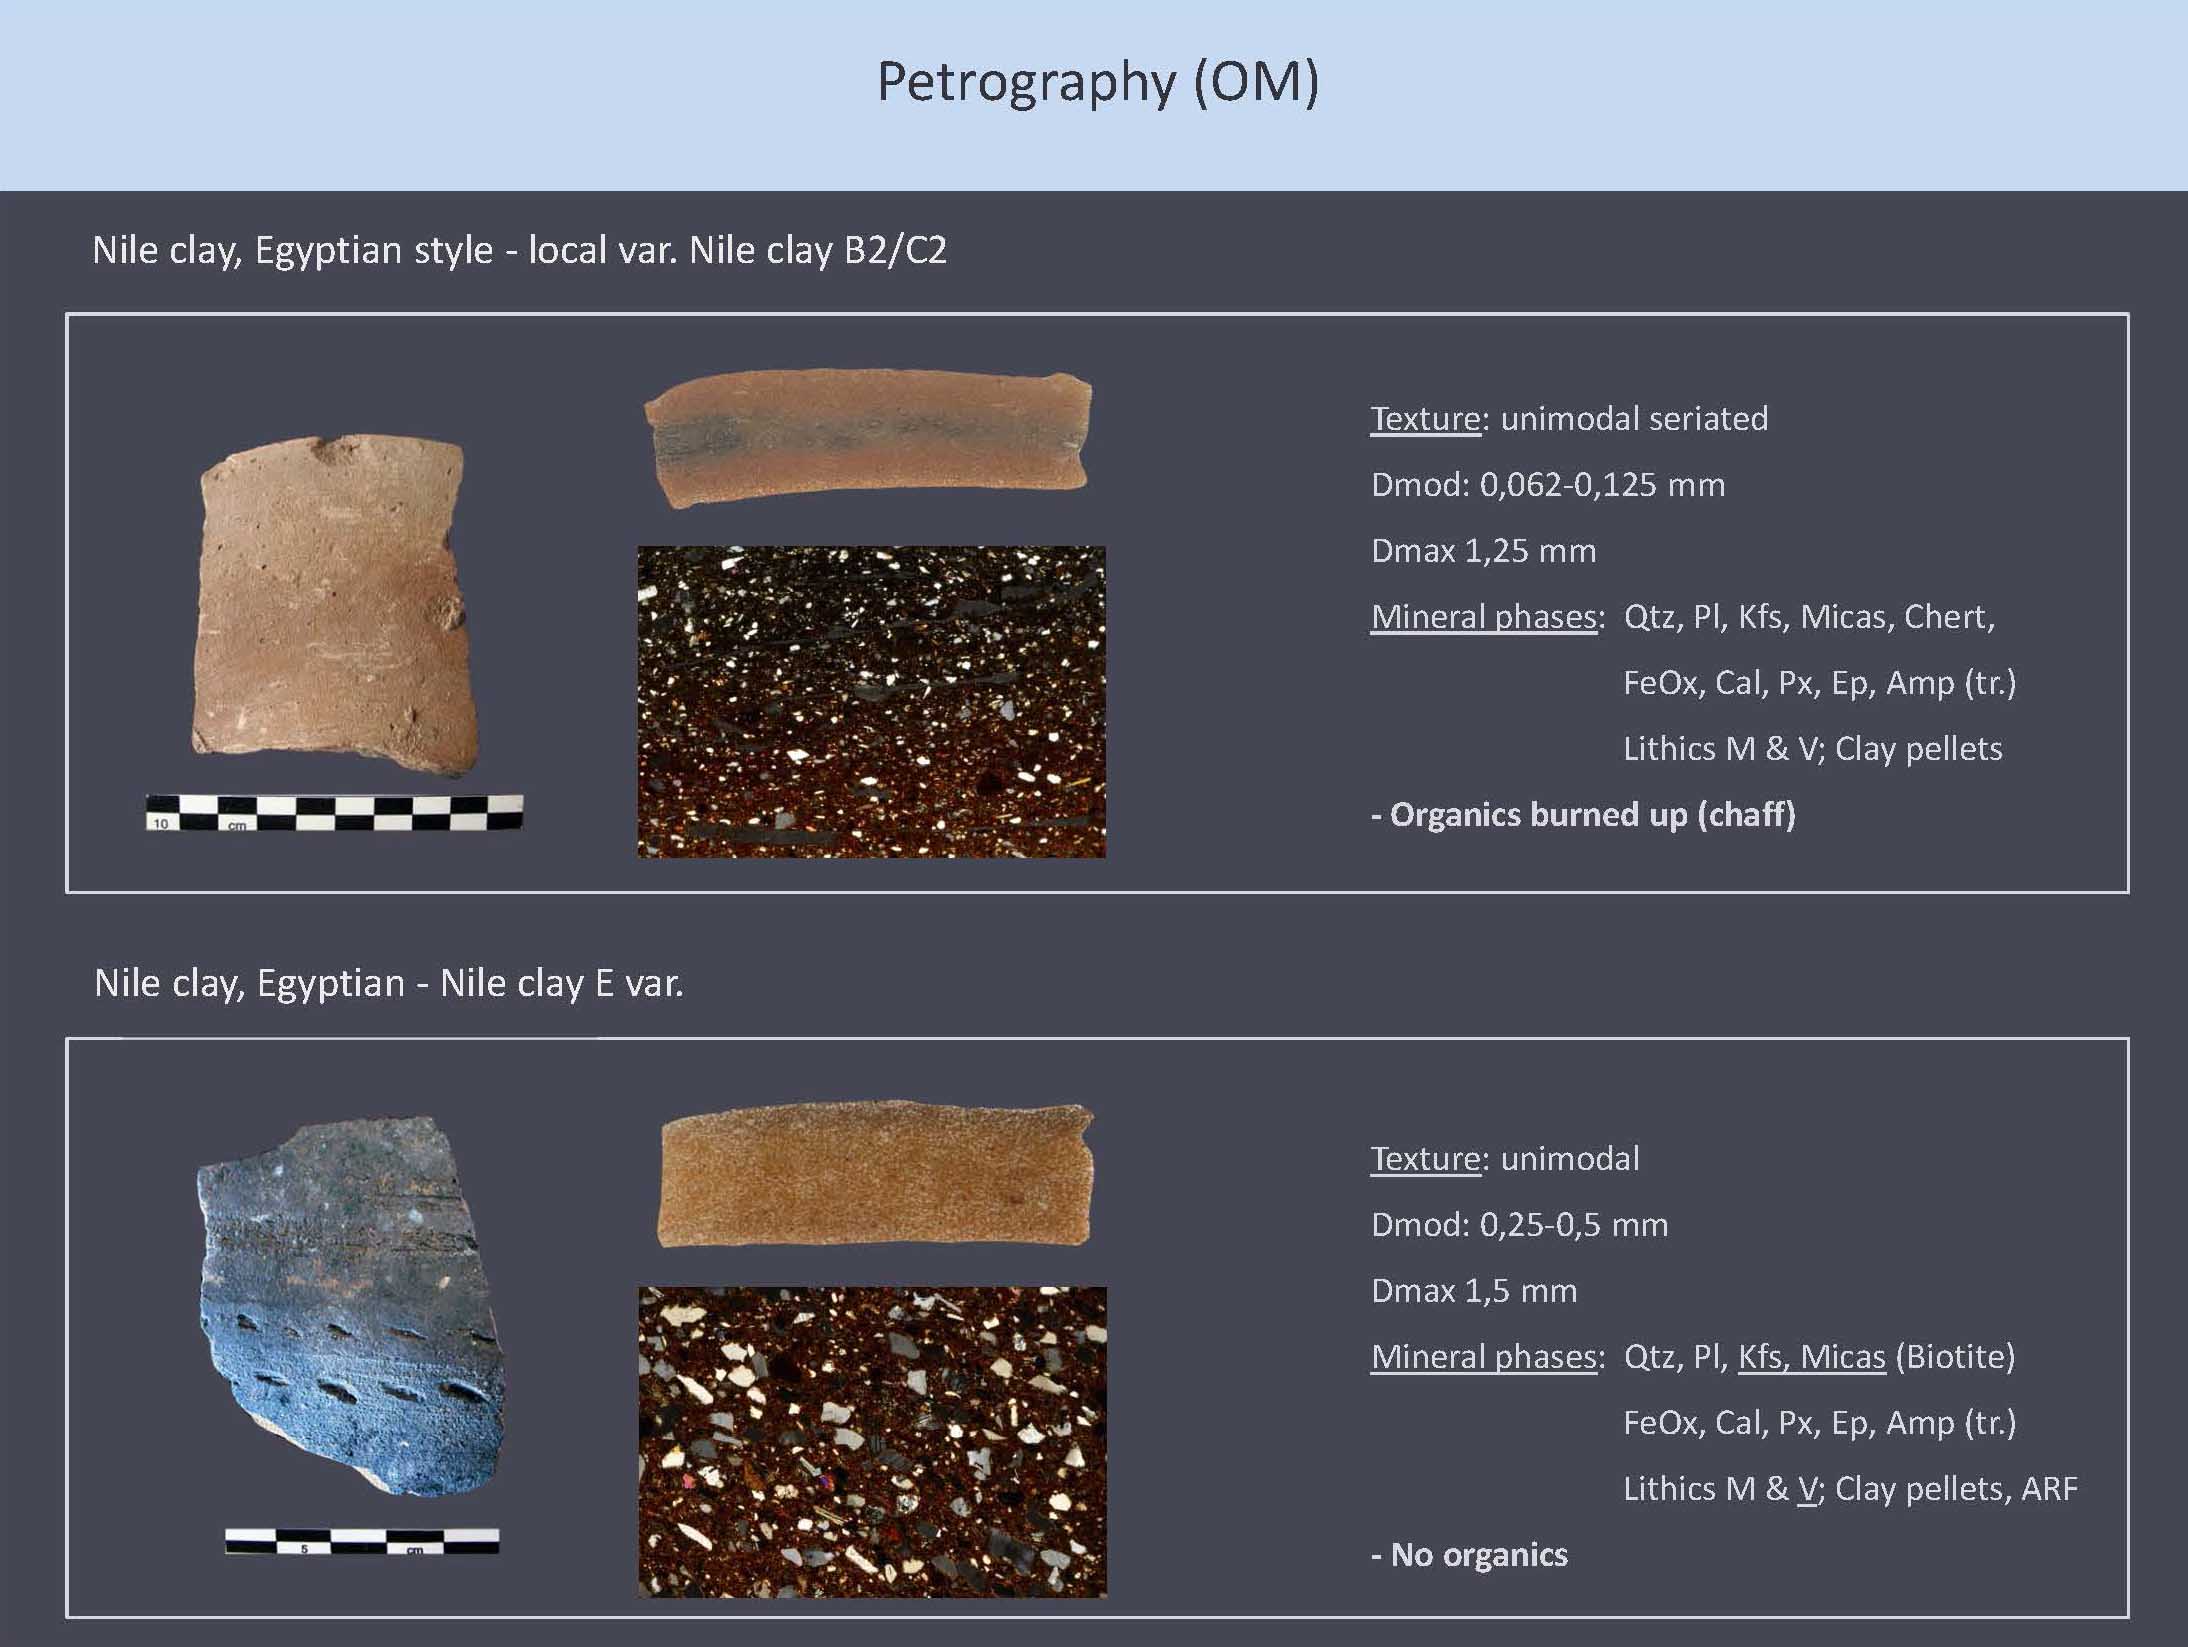 Pdf Characterization Of Maya Pottery By Inaa And Icp Ms